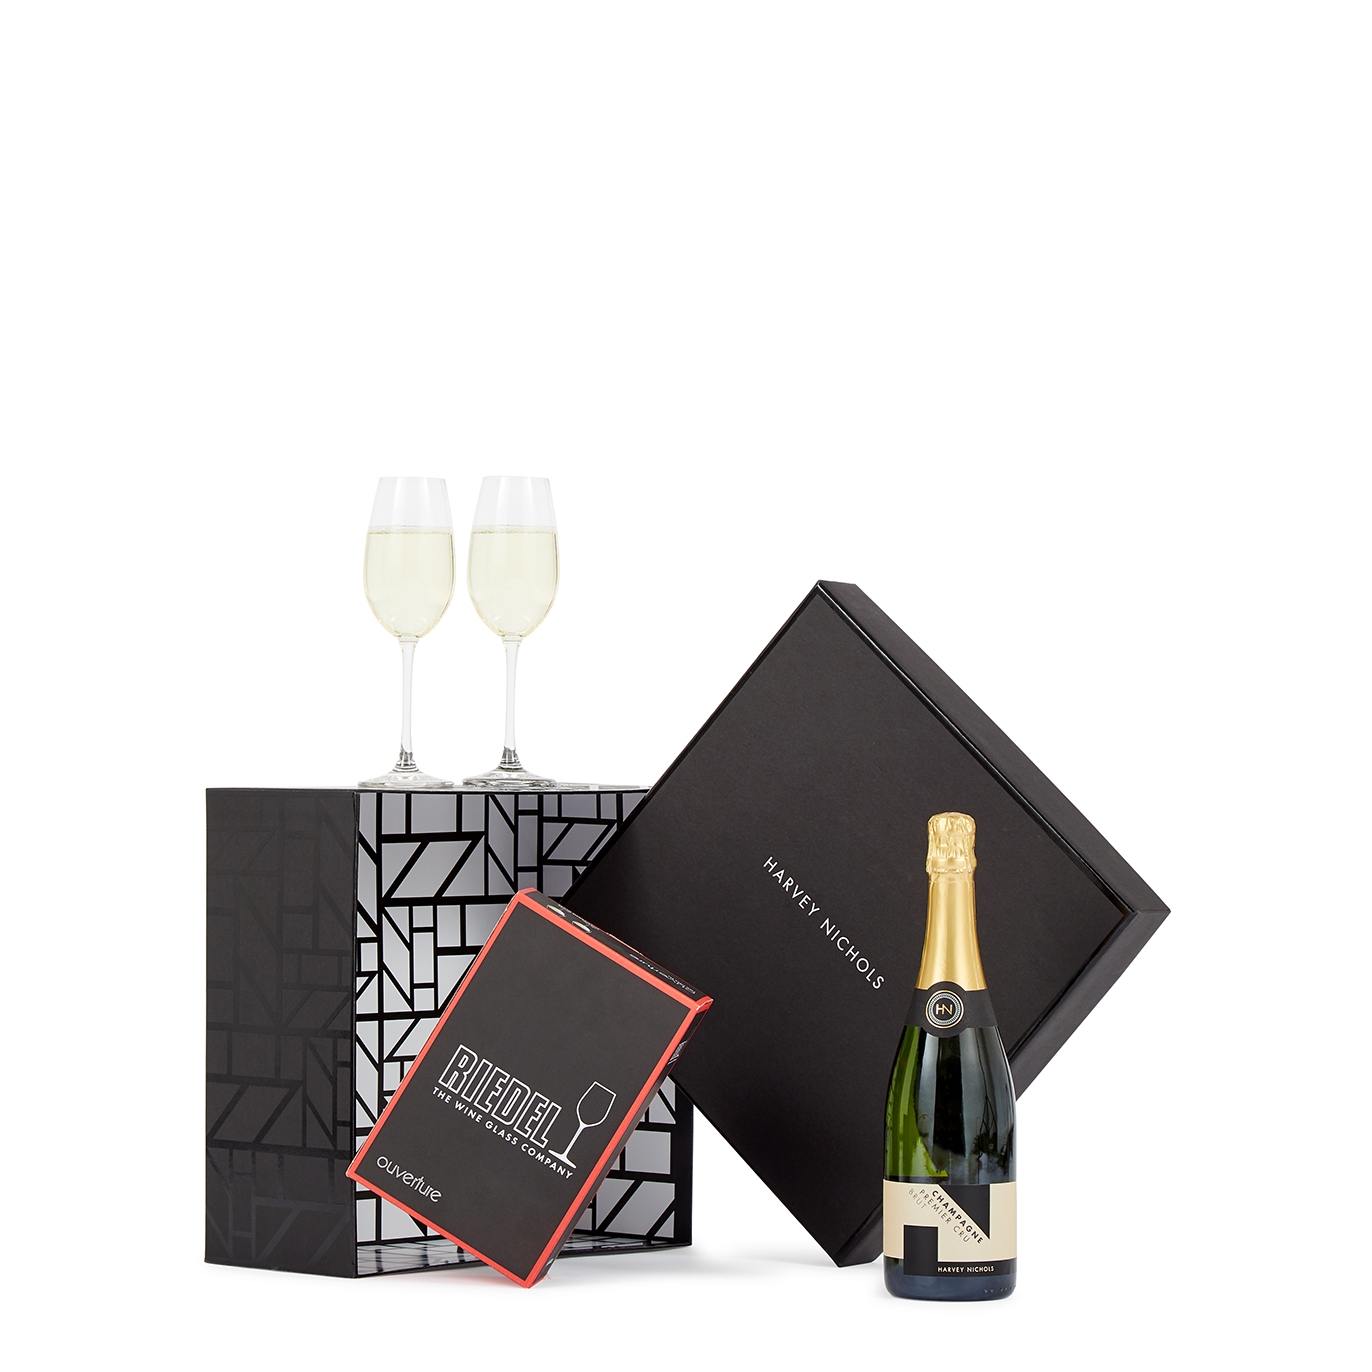 Harvey Nichols Premier Cru Brut Champagne & Riedel Glasses Gift Box Sparkling Wine